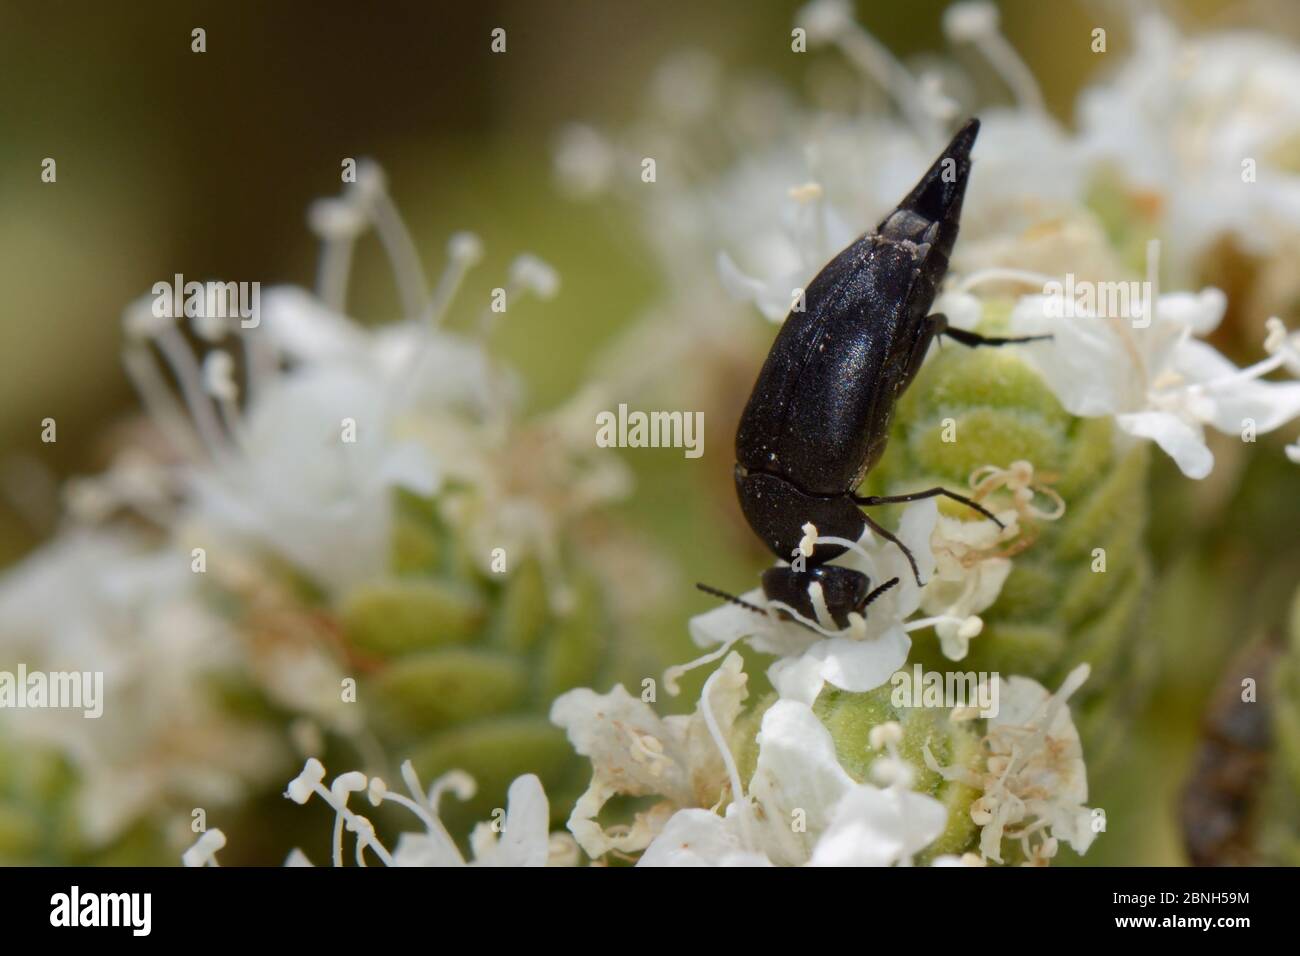 Tumbling flower beetle / Pintail beetle (Mordellidae) feeding on Cretan oregano flower (Origanum onites)  Lesbos / Lesvos, Greece, May. Stock Photo